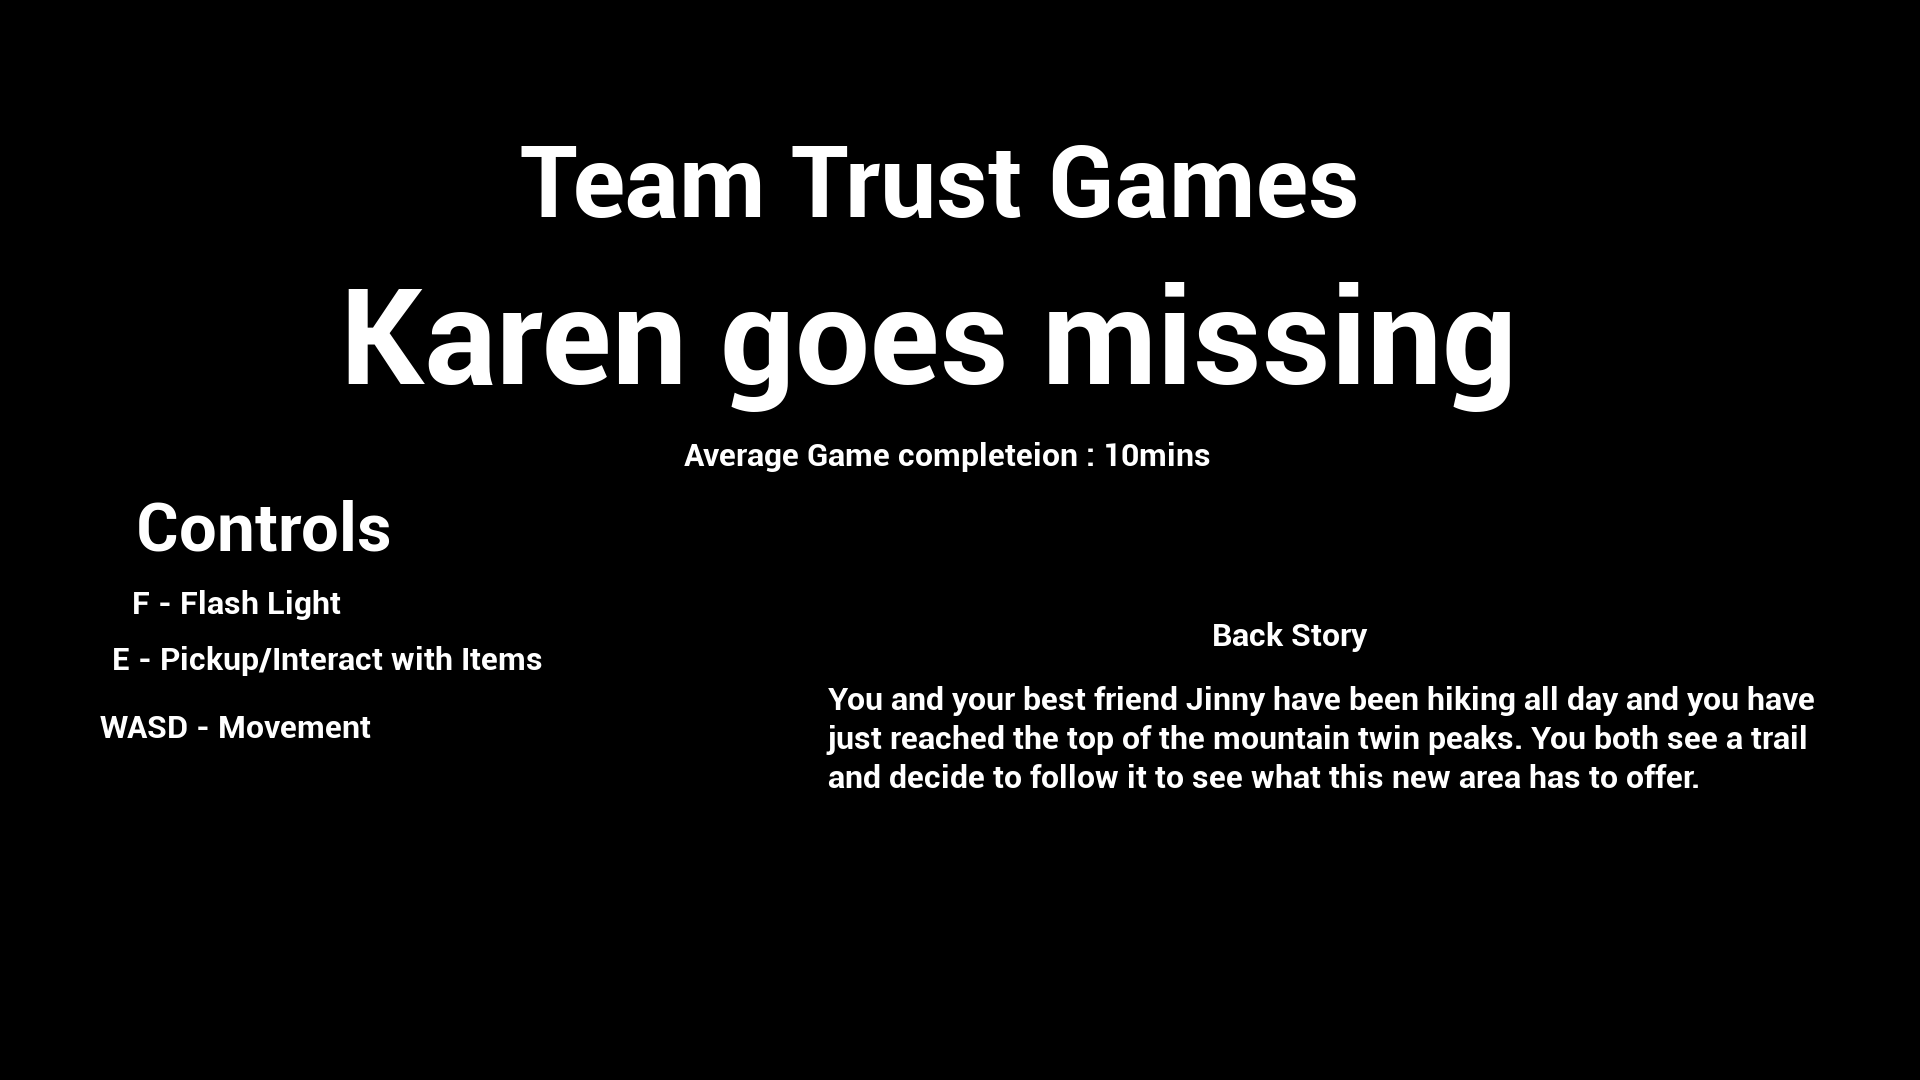 Karens Goes Missing